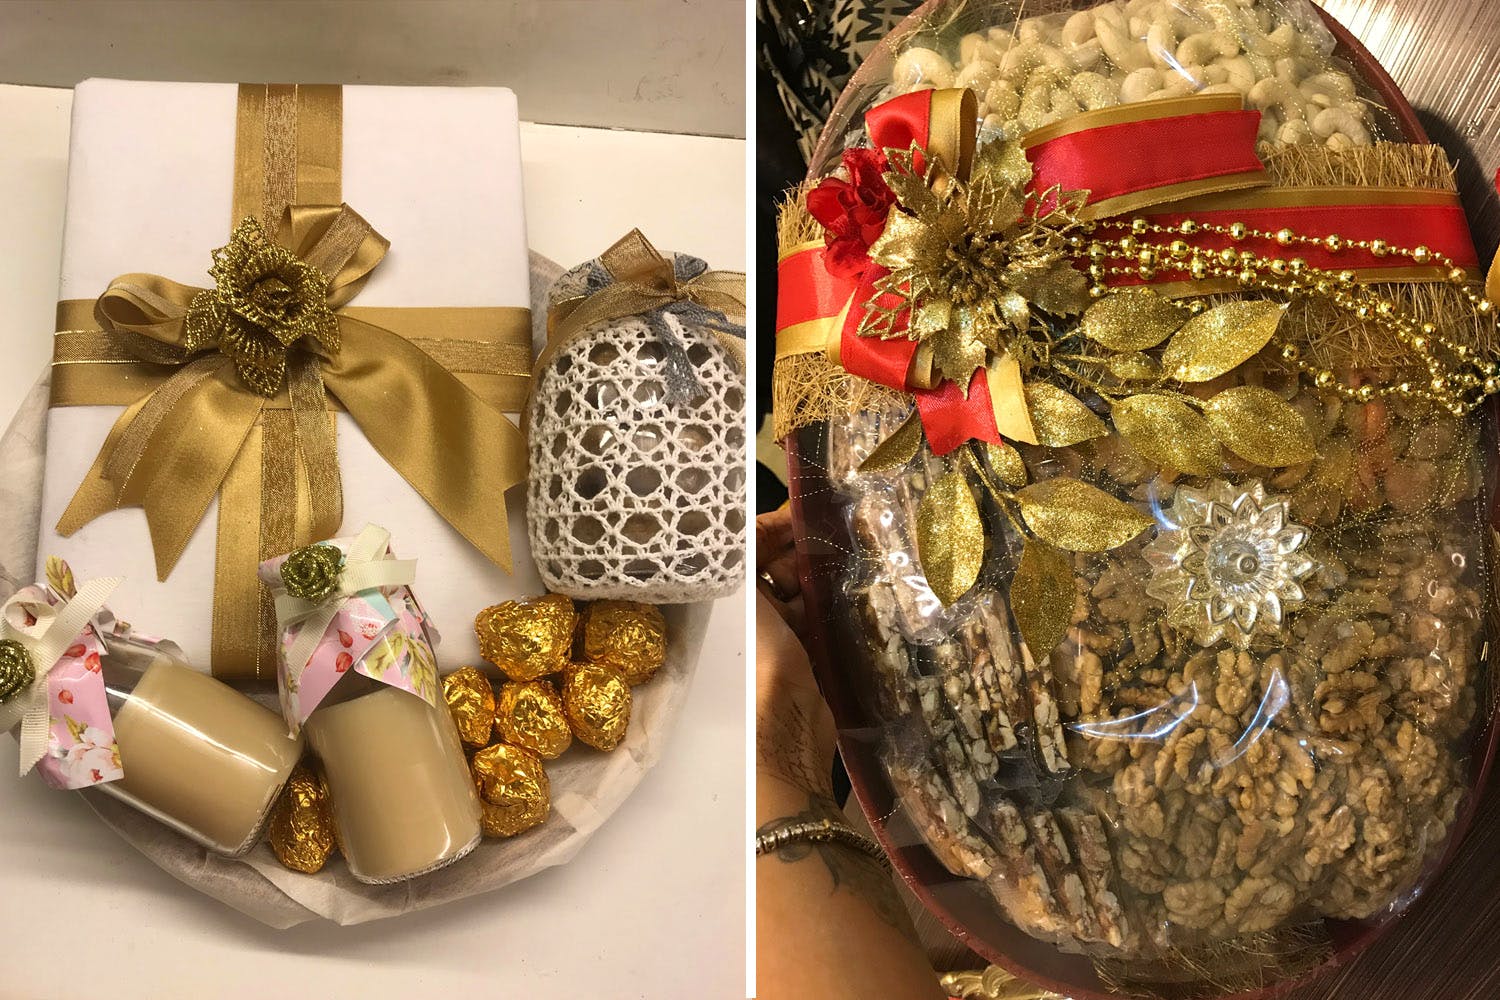 Present,Food,Hamper,Gift basket,Basket,Gift wrapping,Christmas ornament